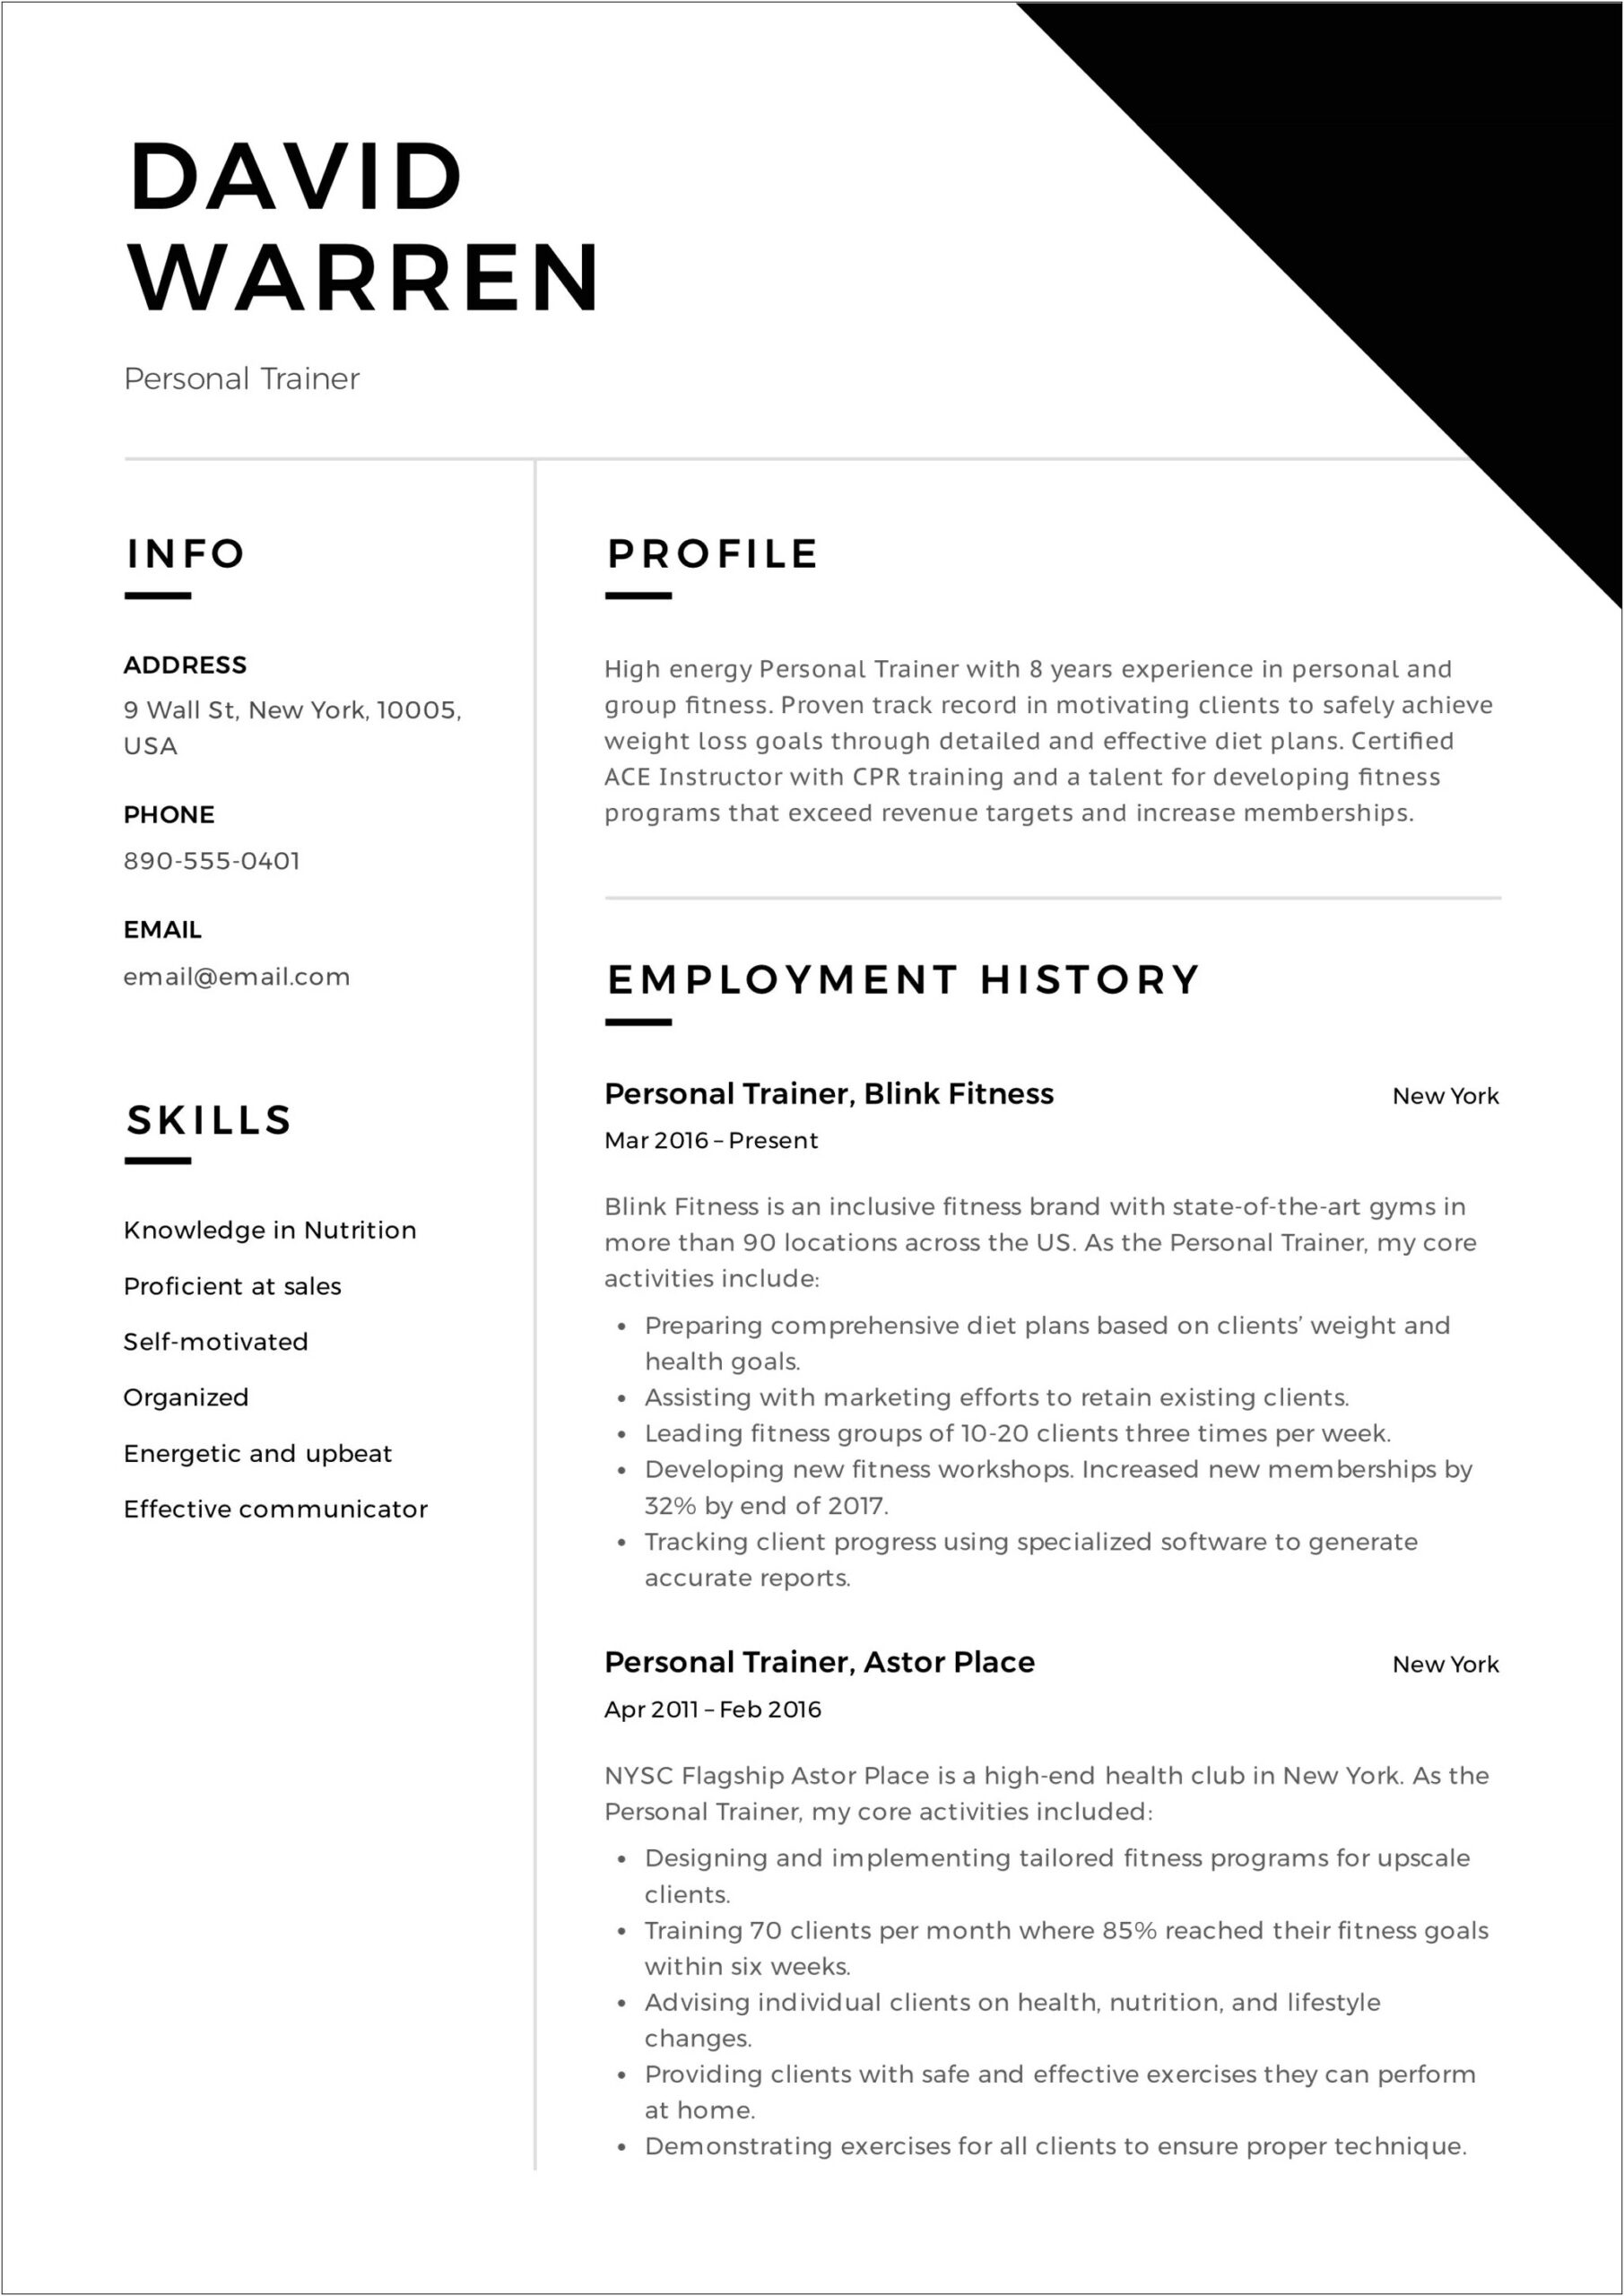 Personal Trainer Job Description On Resume